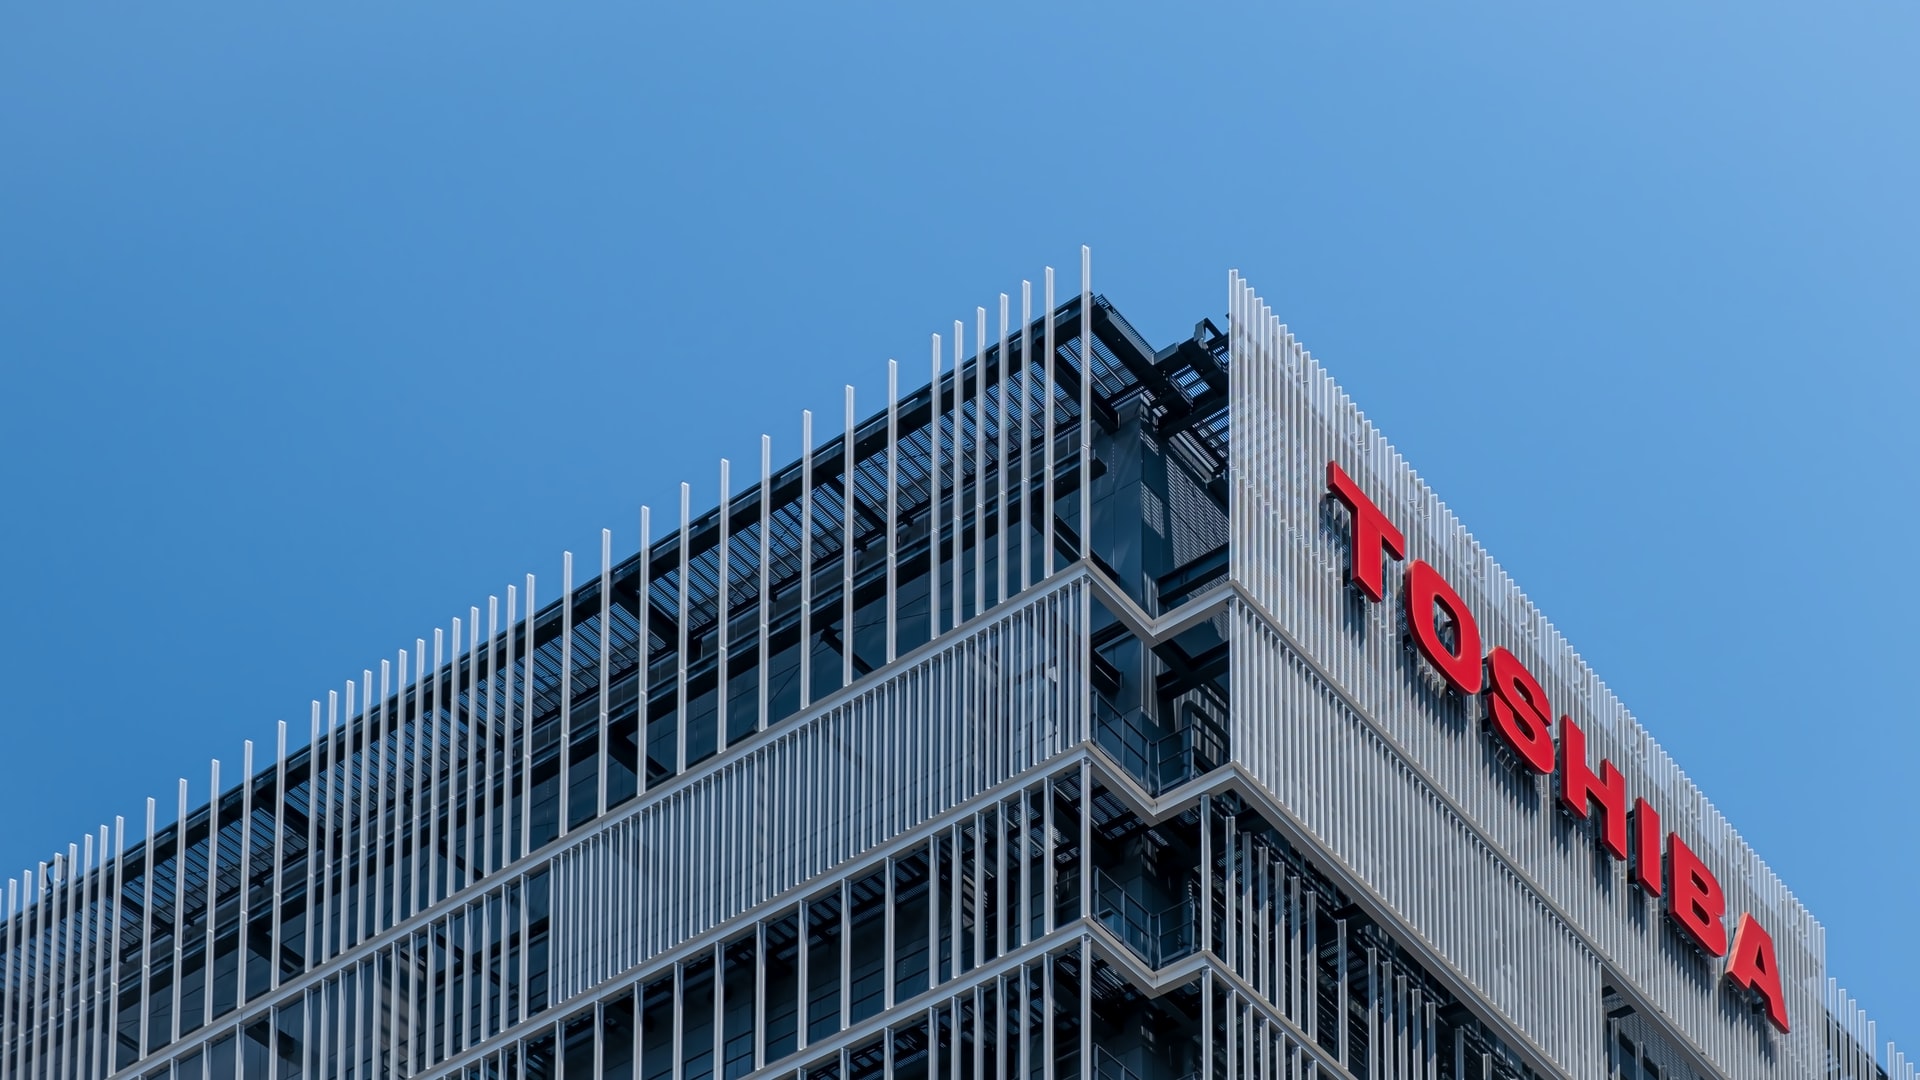 Technology veteran Toshiba splits into three separate companies